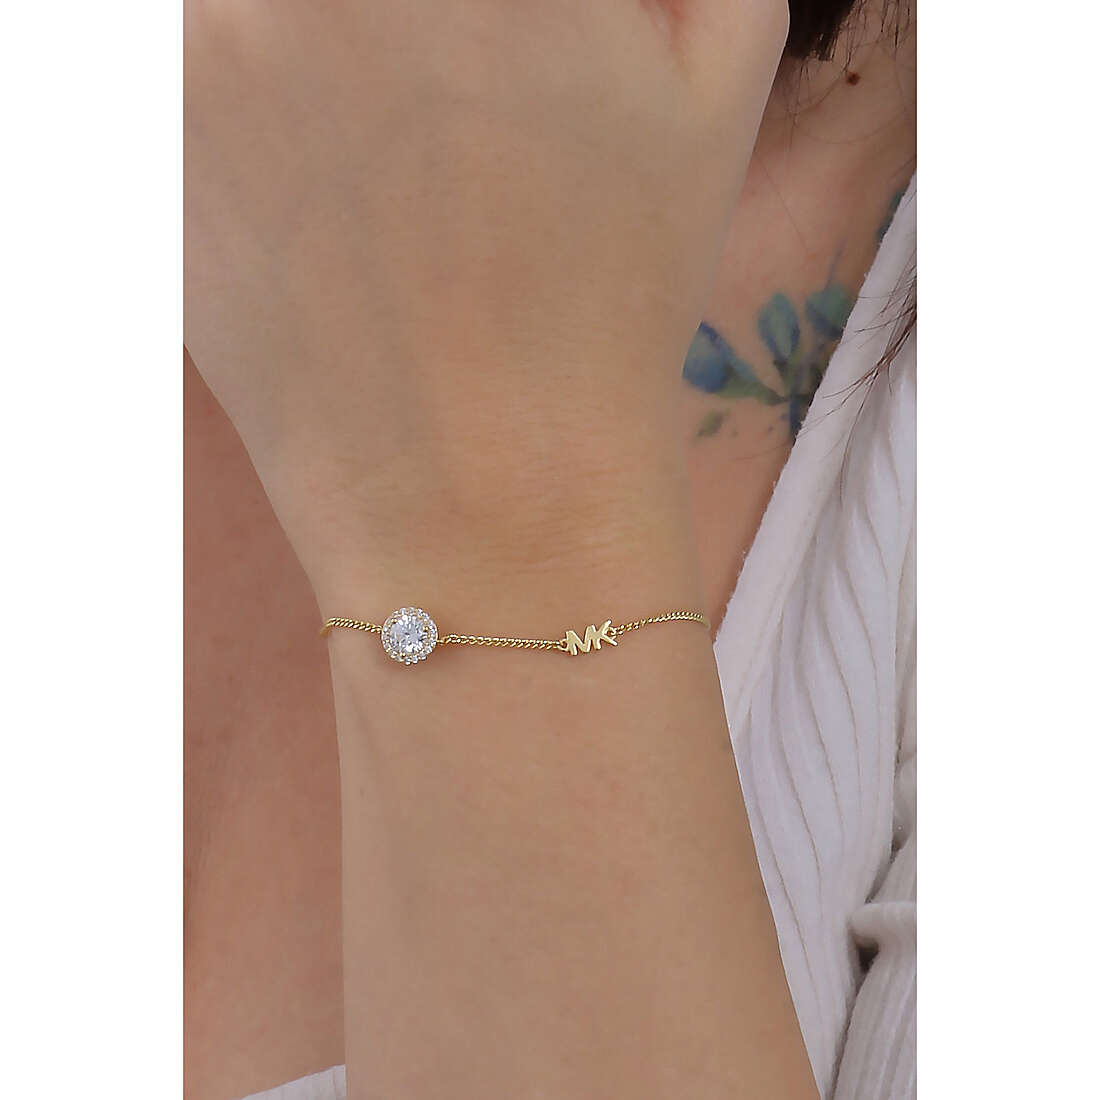 Michael Kors bracelets Kors Mk woman MKC1206AN710 wearing